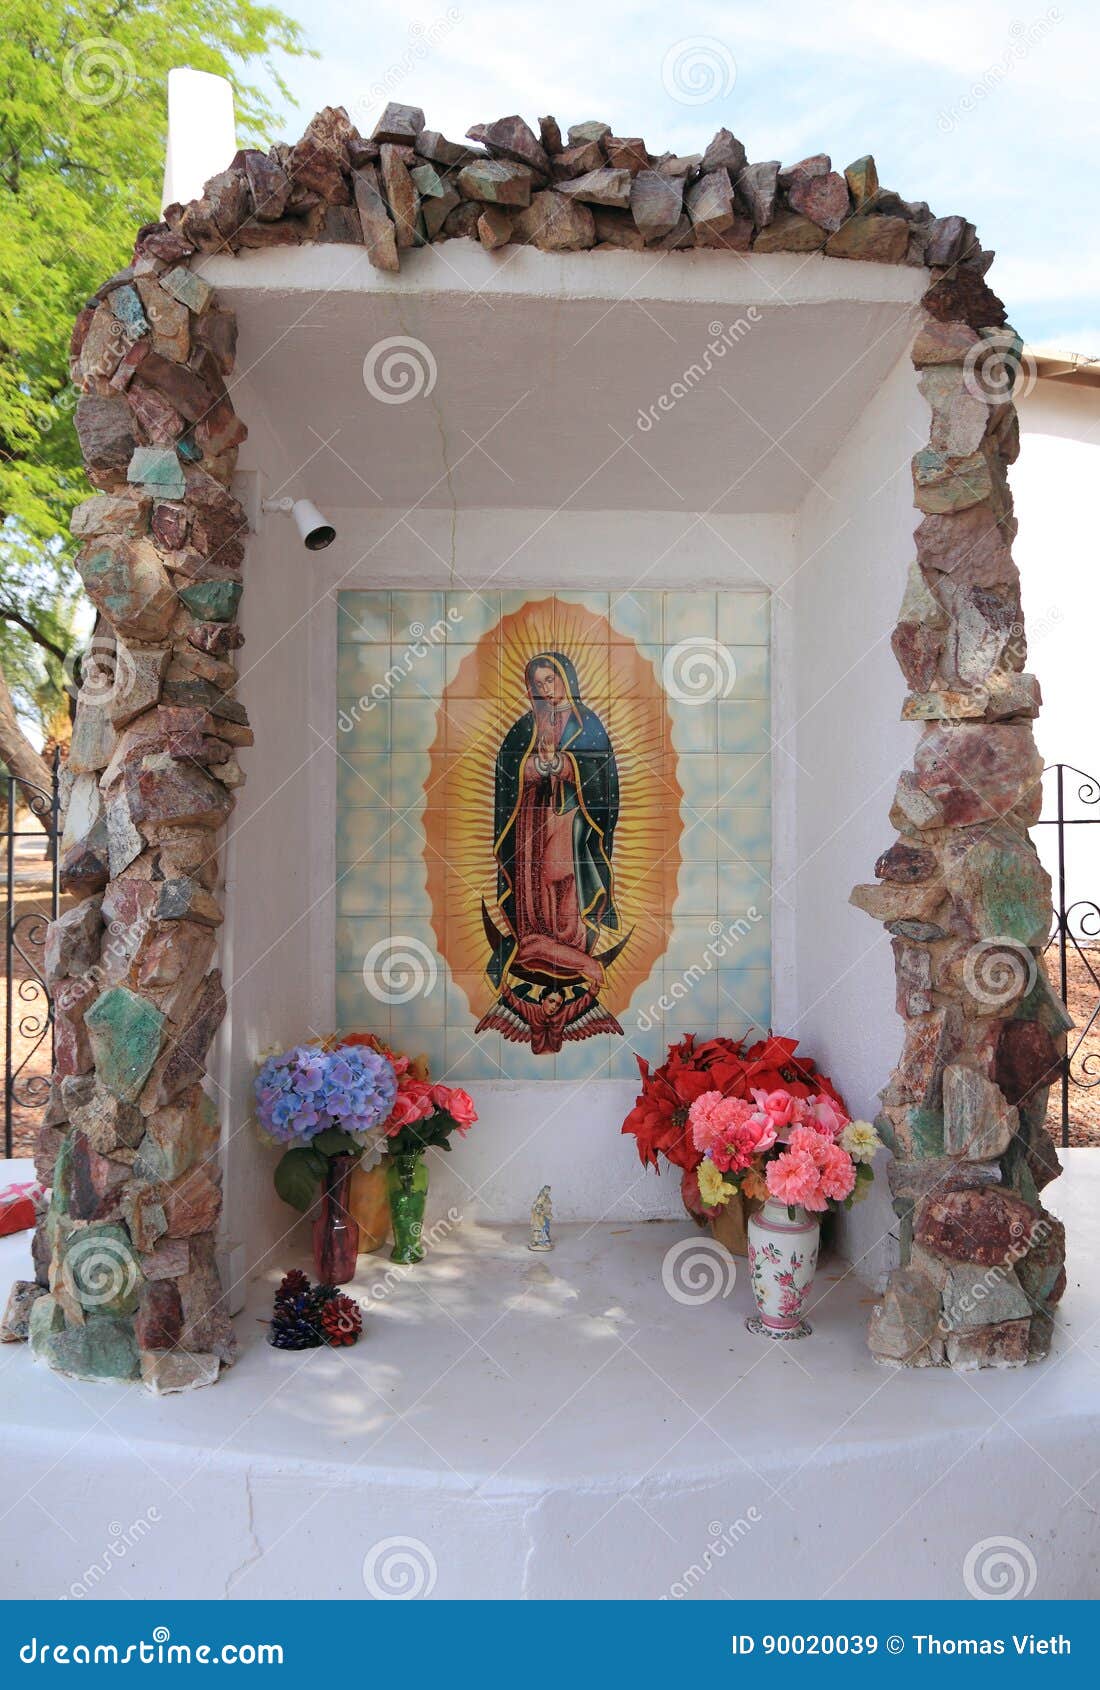 florence, arizona: virgin mary tile mosaic